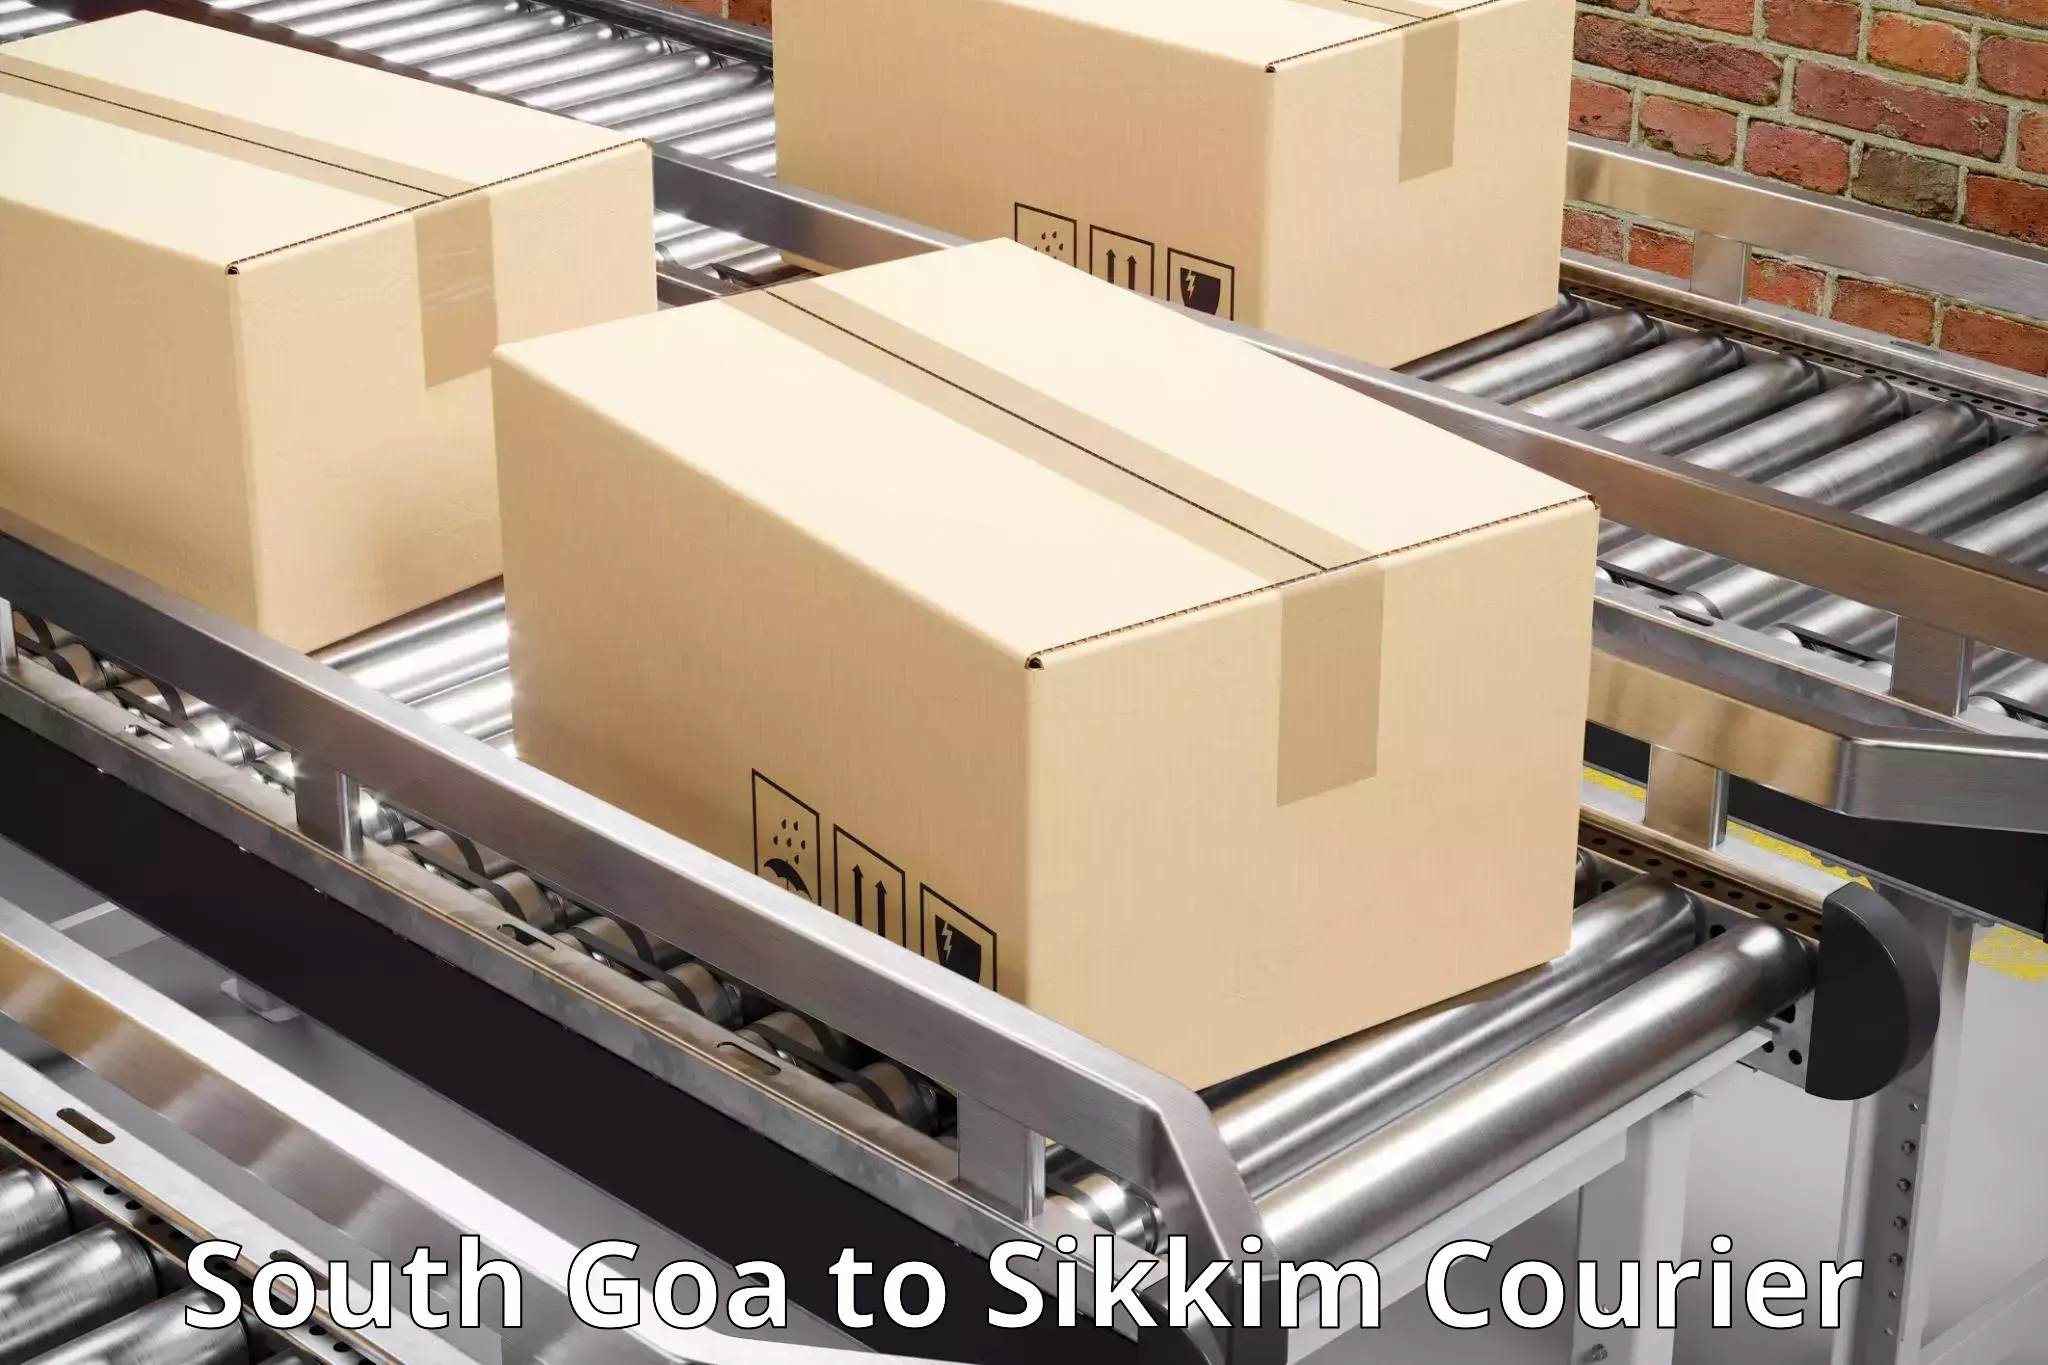 International parcel service South Goa to Sikkim